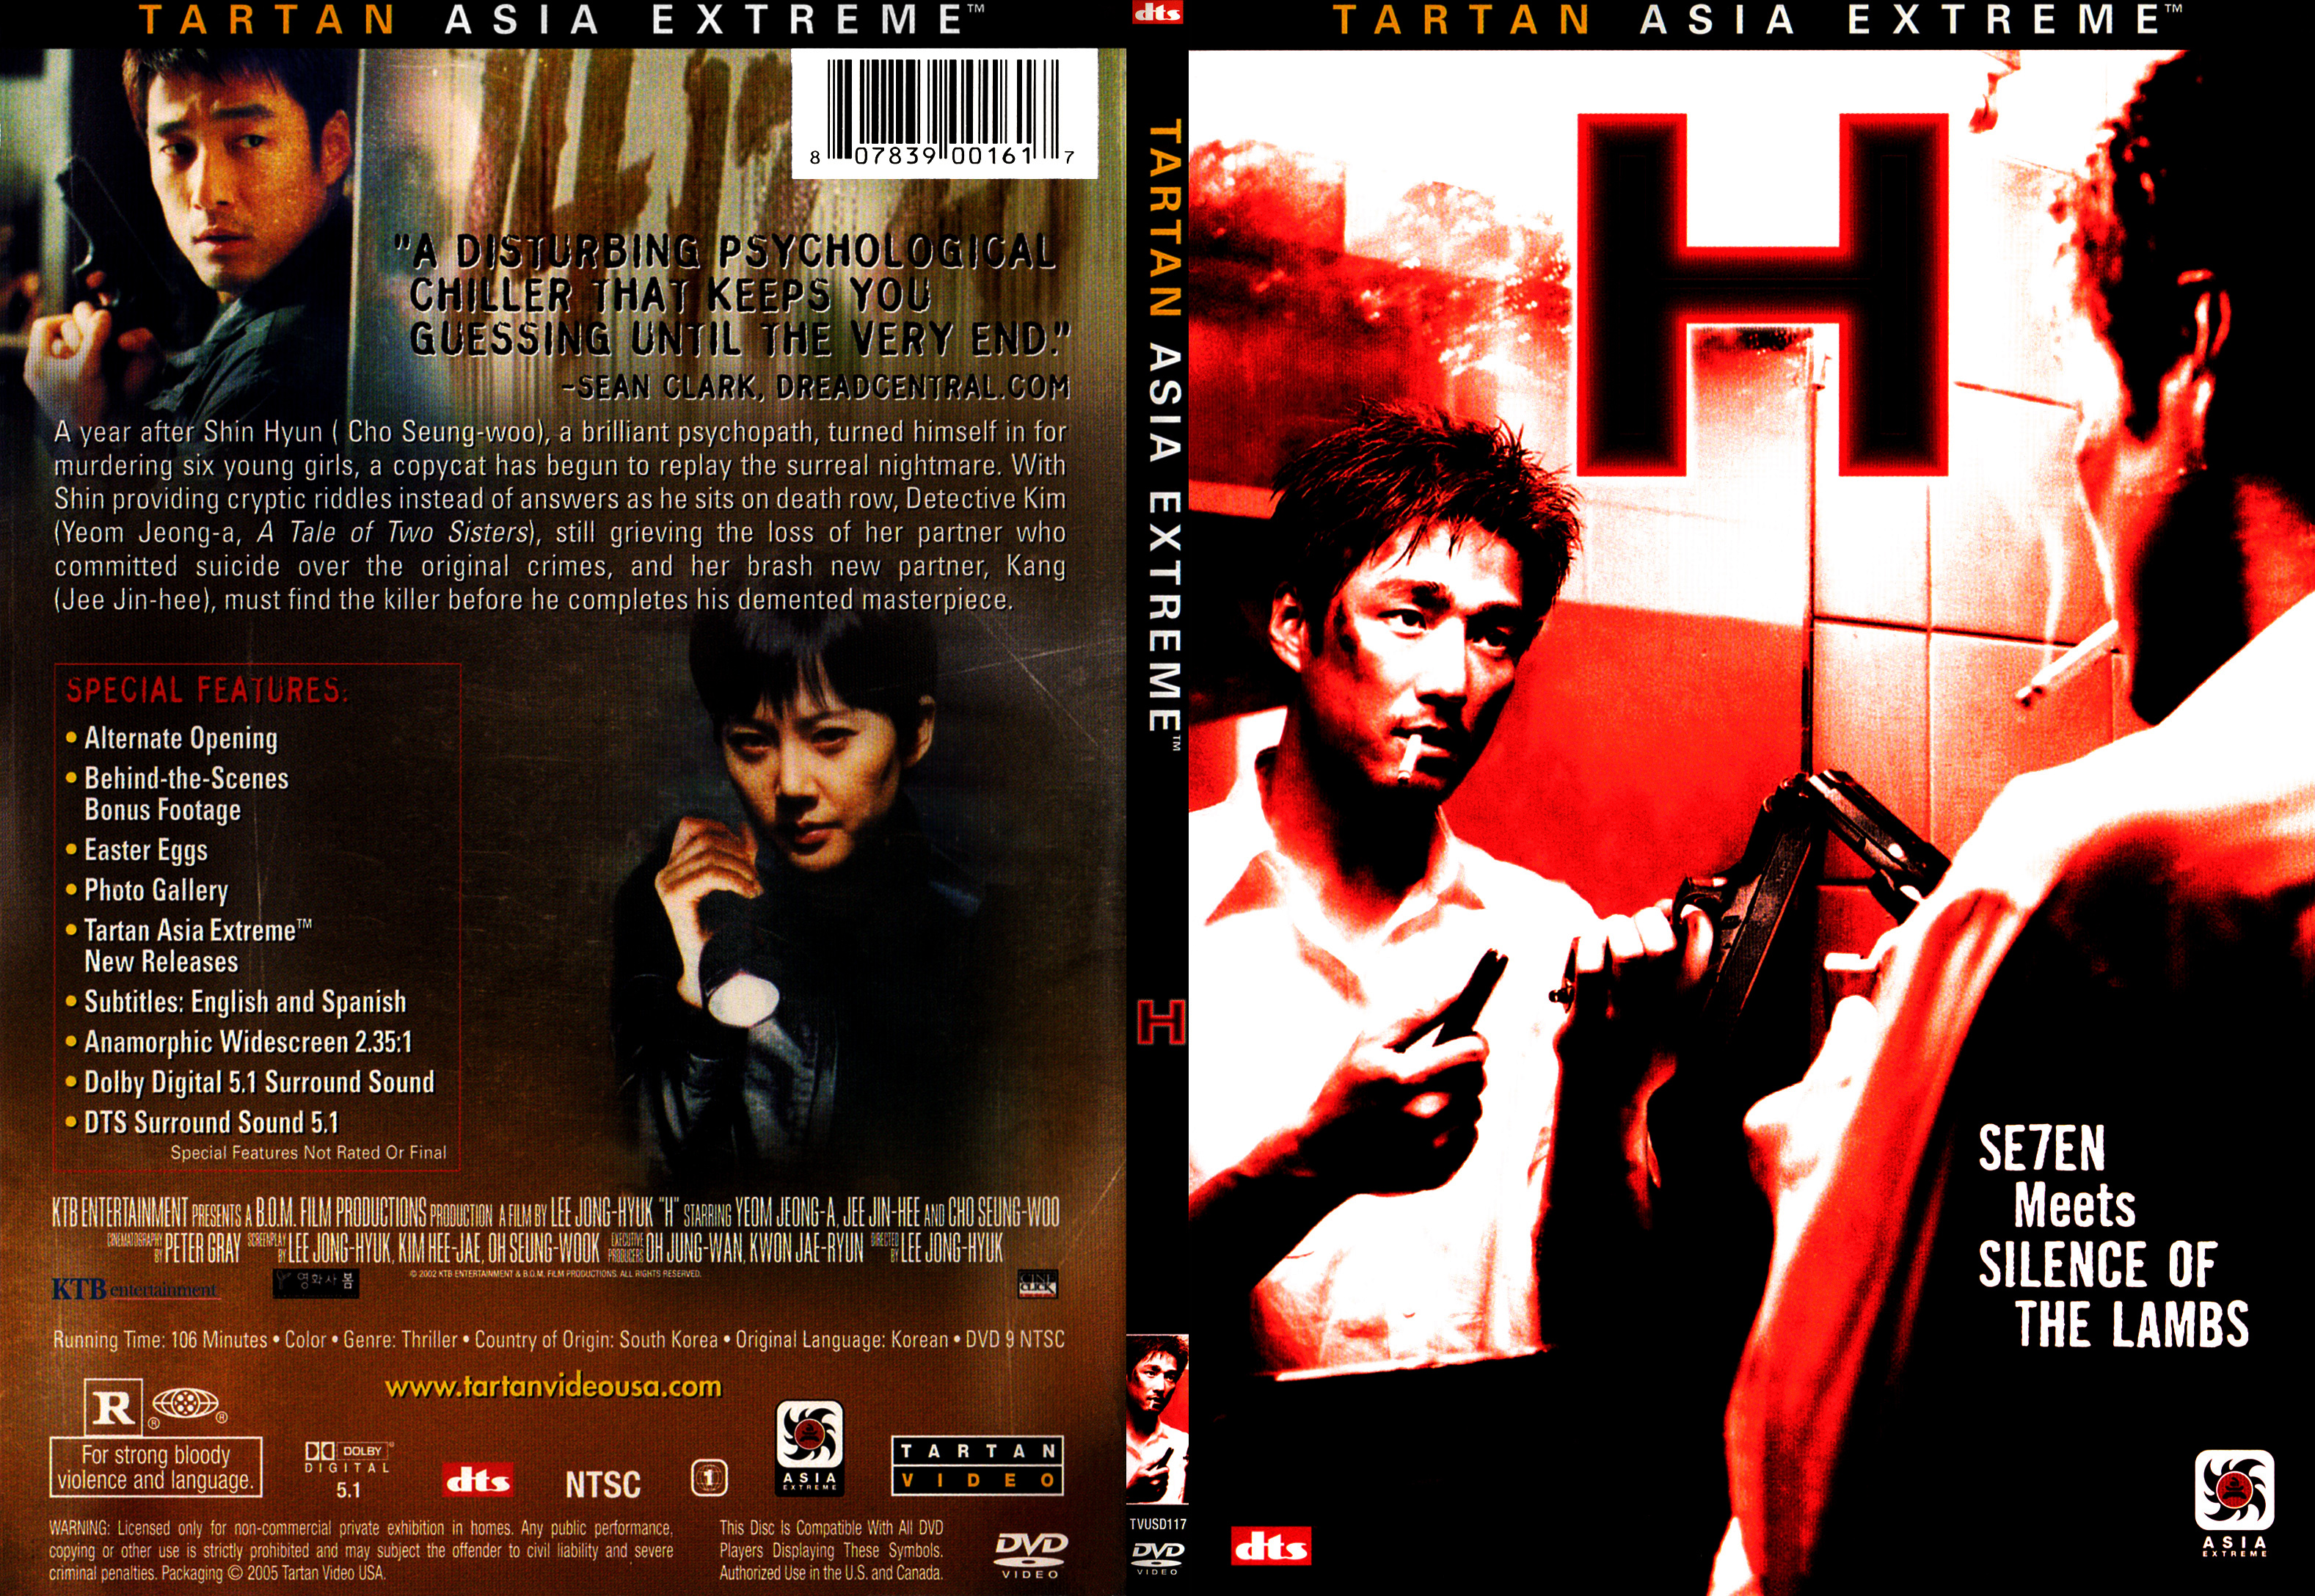 Covers Box Sk H 05 South Korea Thin Dvd Case Cover 300dpi Ps Enhanced High Quality Dvd Blueray Movie